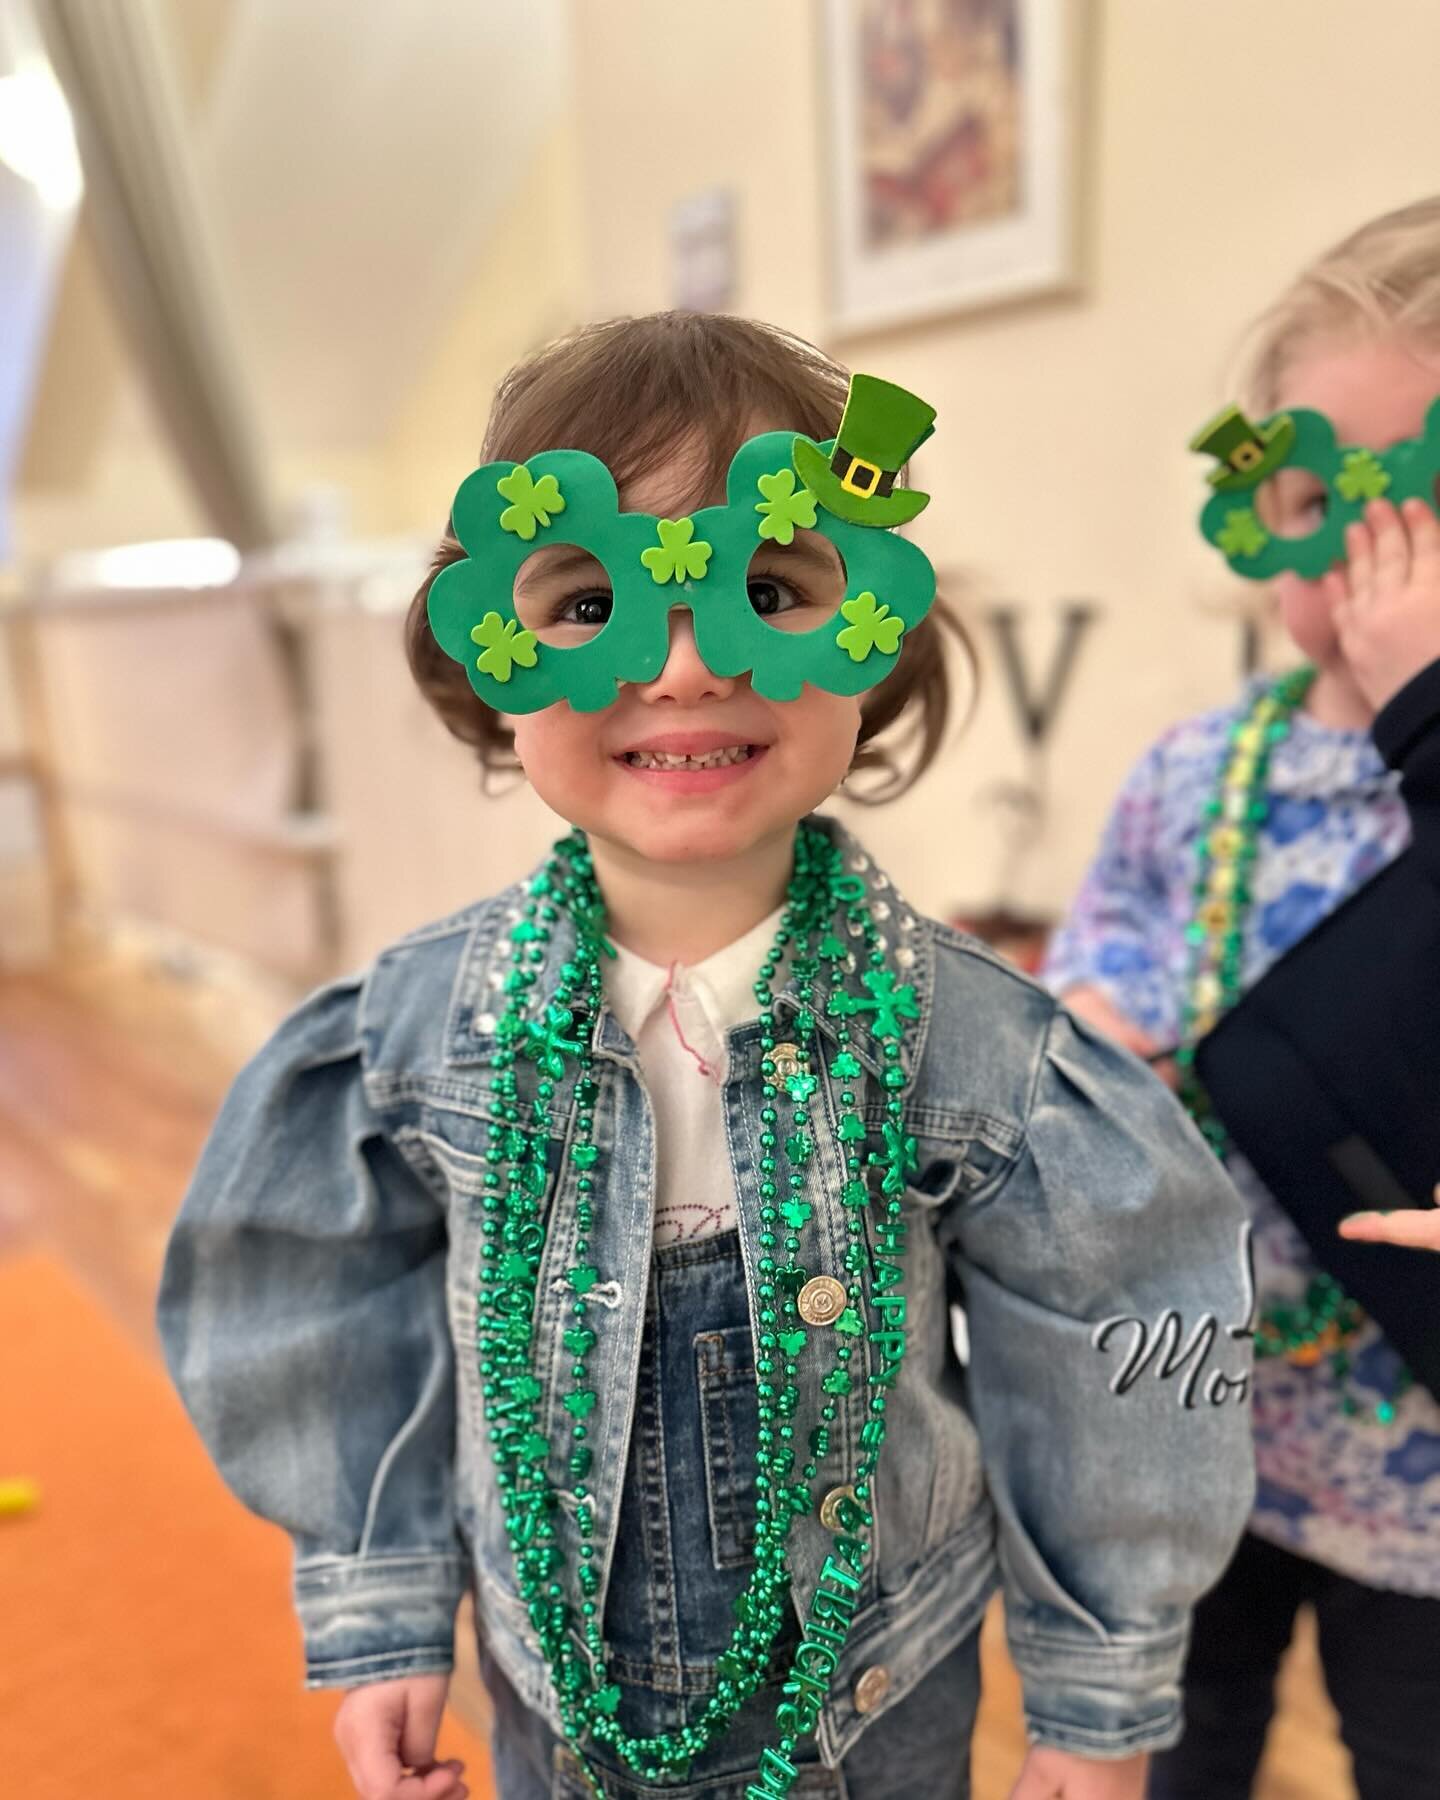 Happy St. Patrick's Day! 

May the luck of the ☘️ always be with you! 

☘️💚☘️💚☘️💚☘️💚☘️💚☘️💚☘️💚☘️

#stpatricksday #nyc #littlelearning #littlelearninginc #wherelearningfeelslikemagic